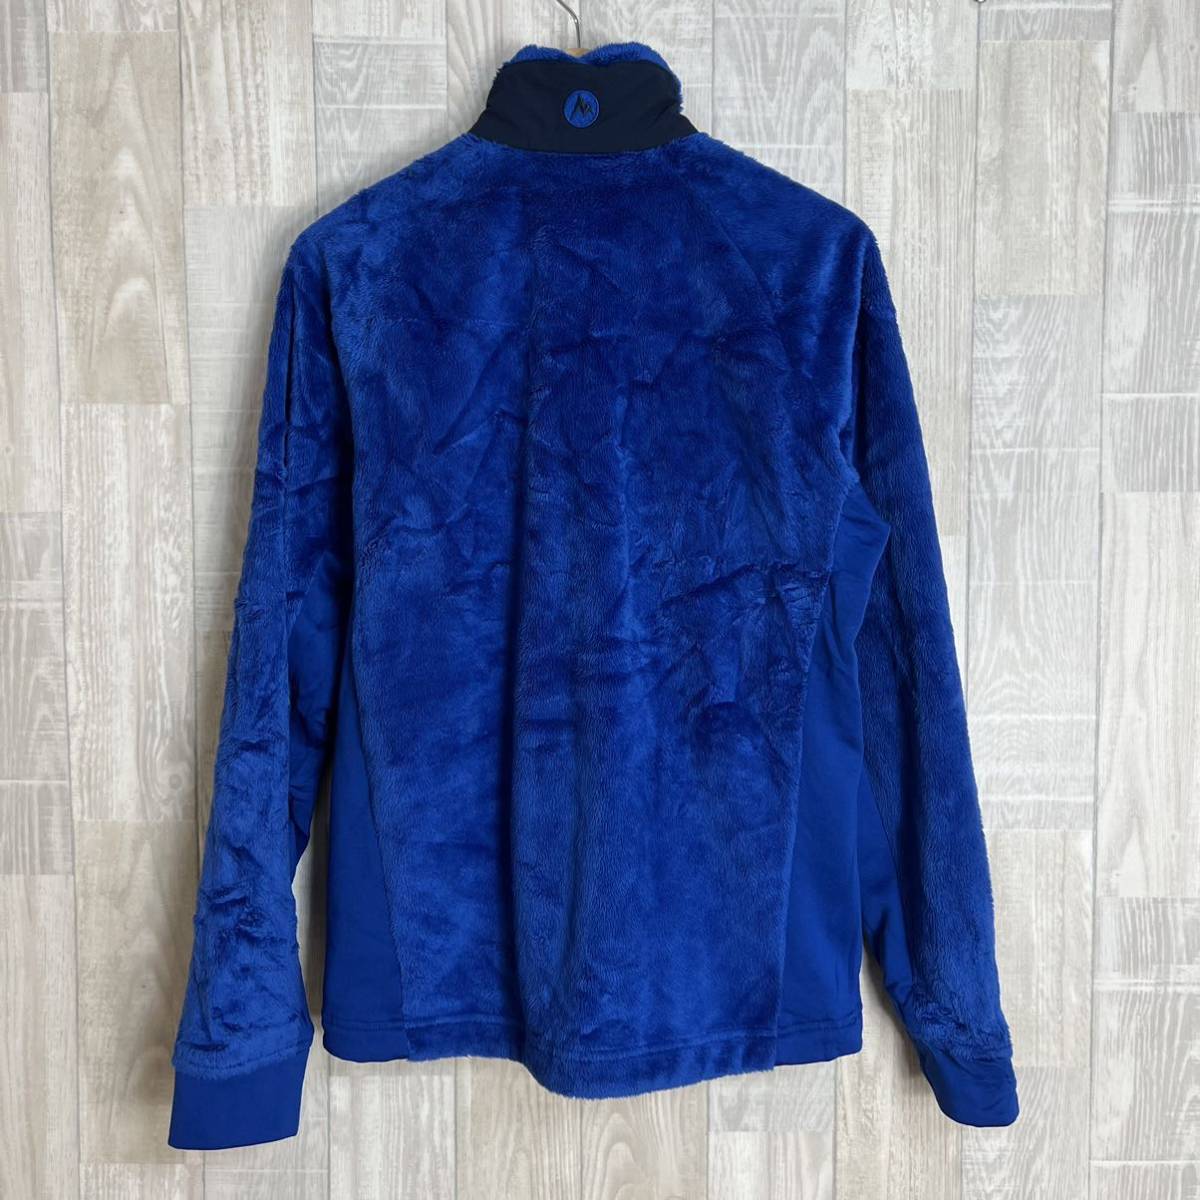 M3527 Marmot Marmot fleece jacket S/P size blue blue series men's POLARTEC outer outer garment feather woven Zip up 